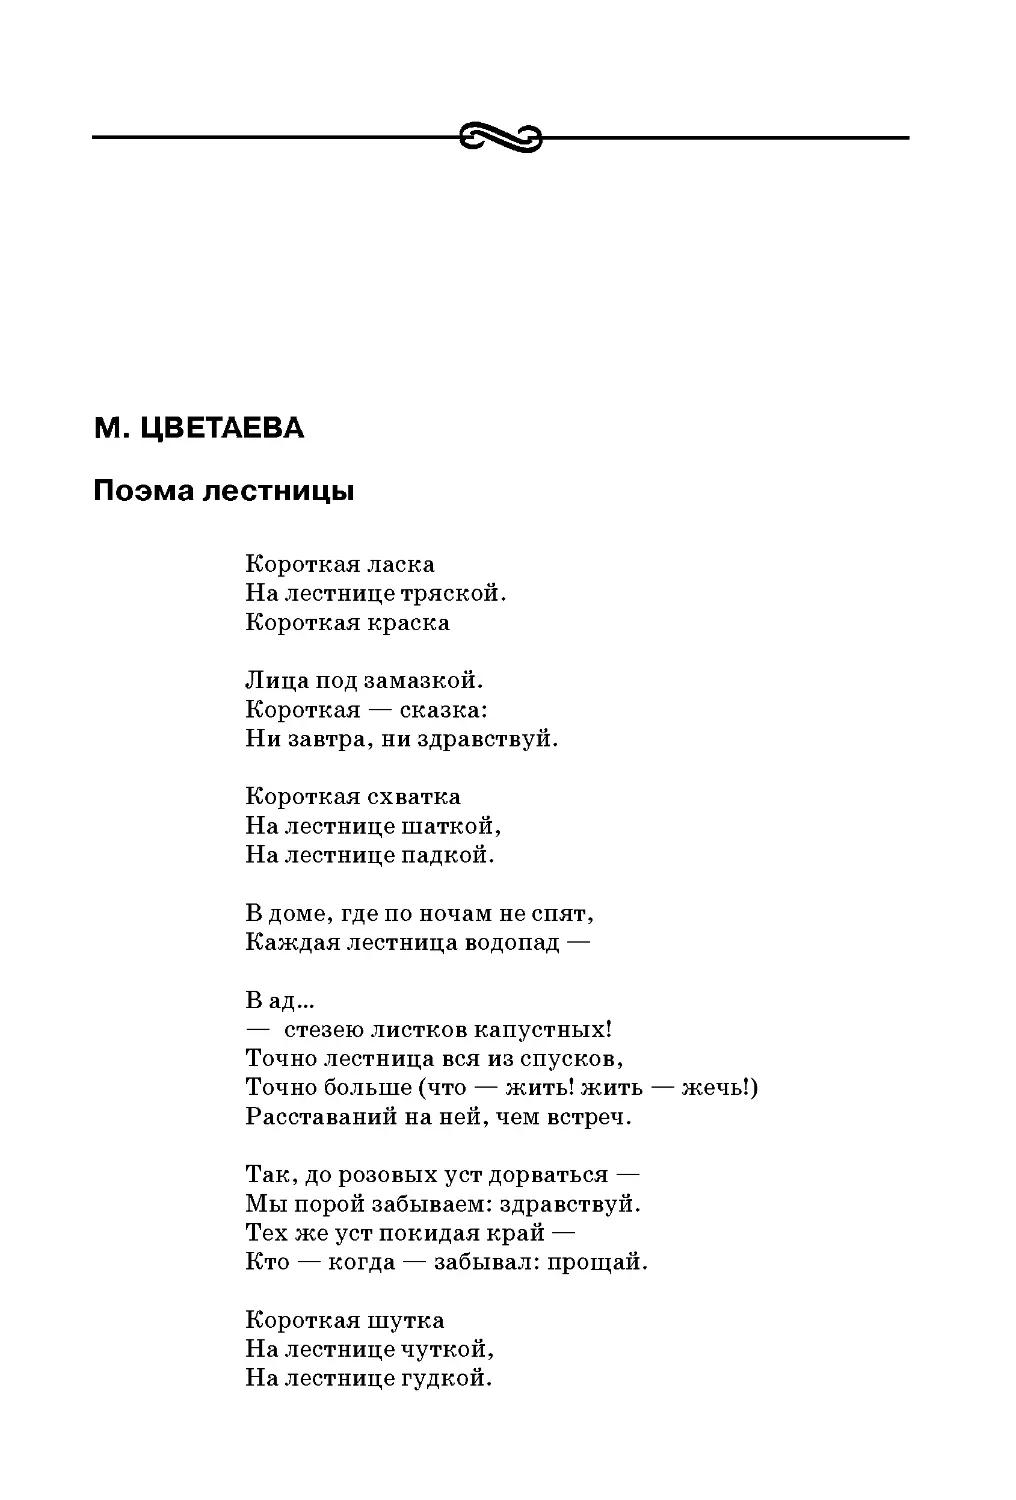 М. Цветаева. Поэма лестницы